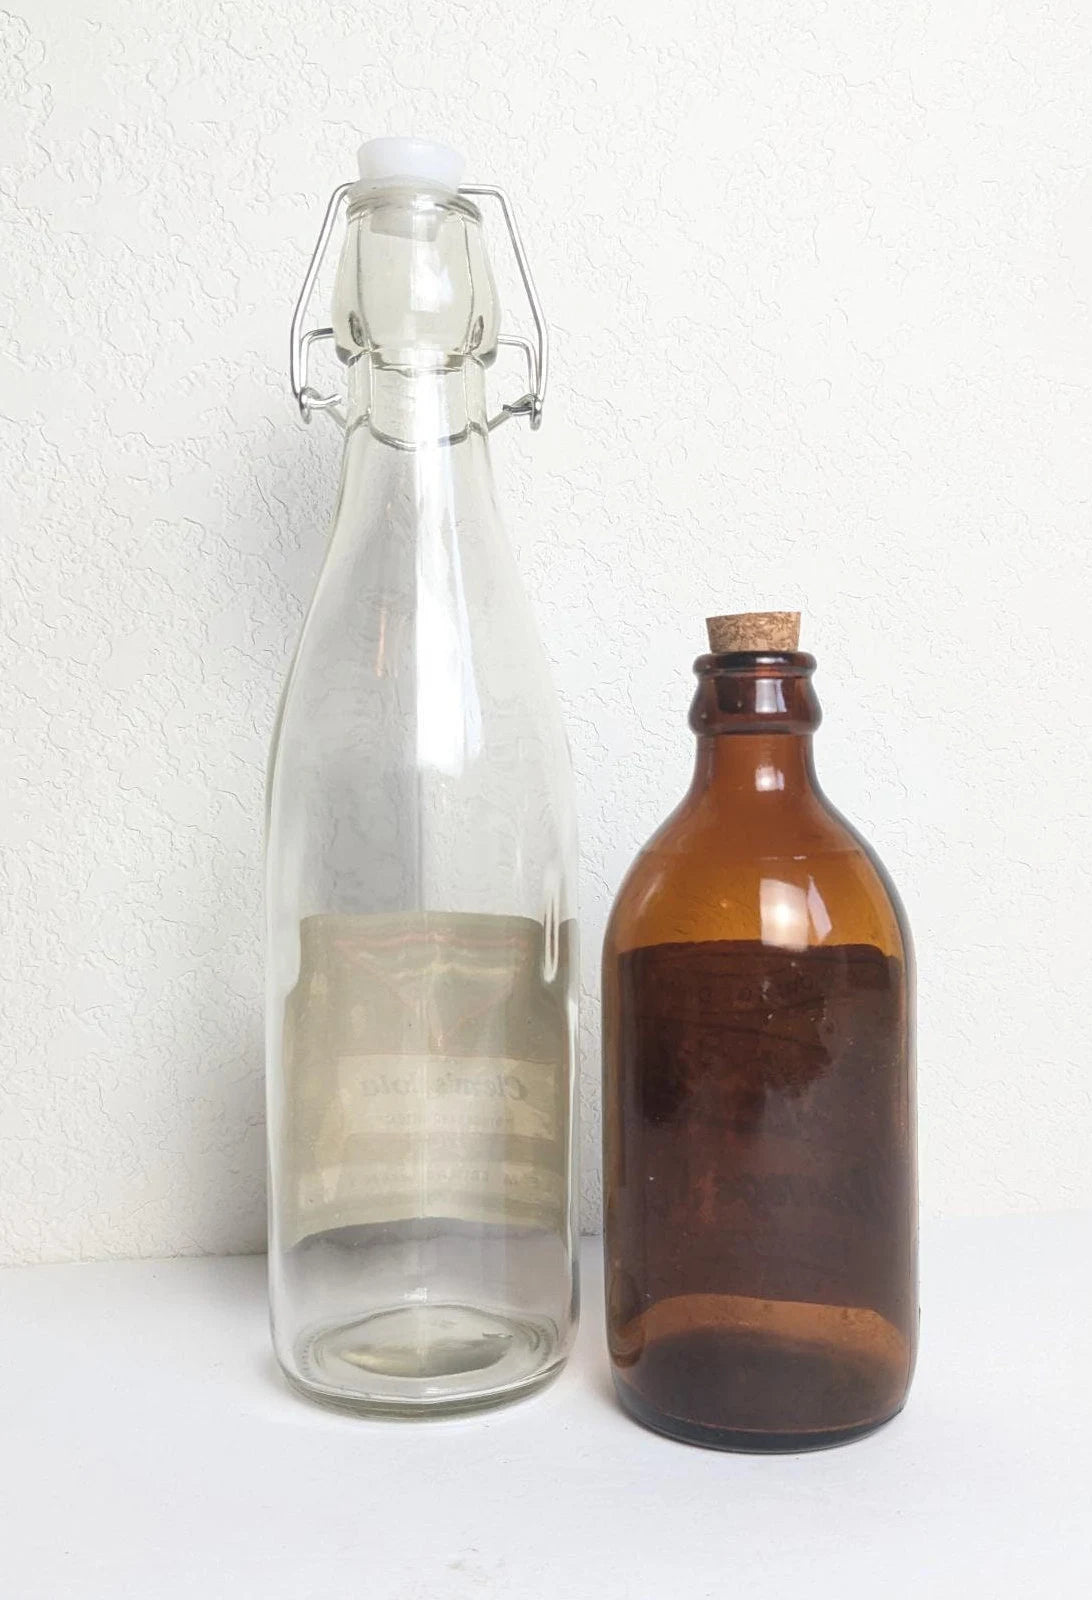 Vintage Antique Style Soda Bottles - Authentic Clem's Cola and Cupid Orange Soda Labels